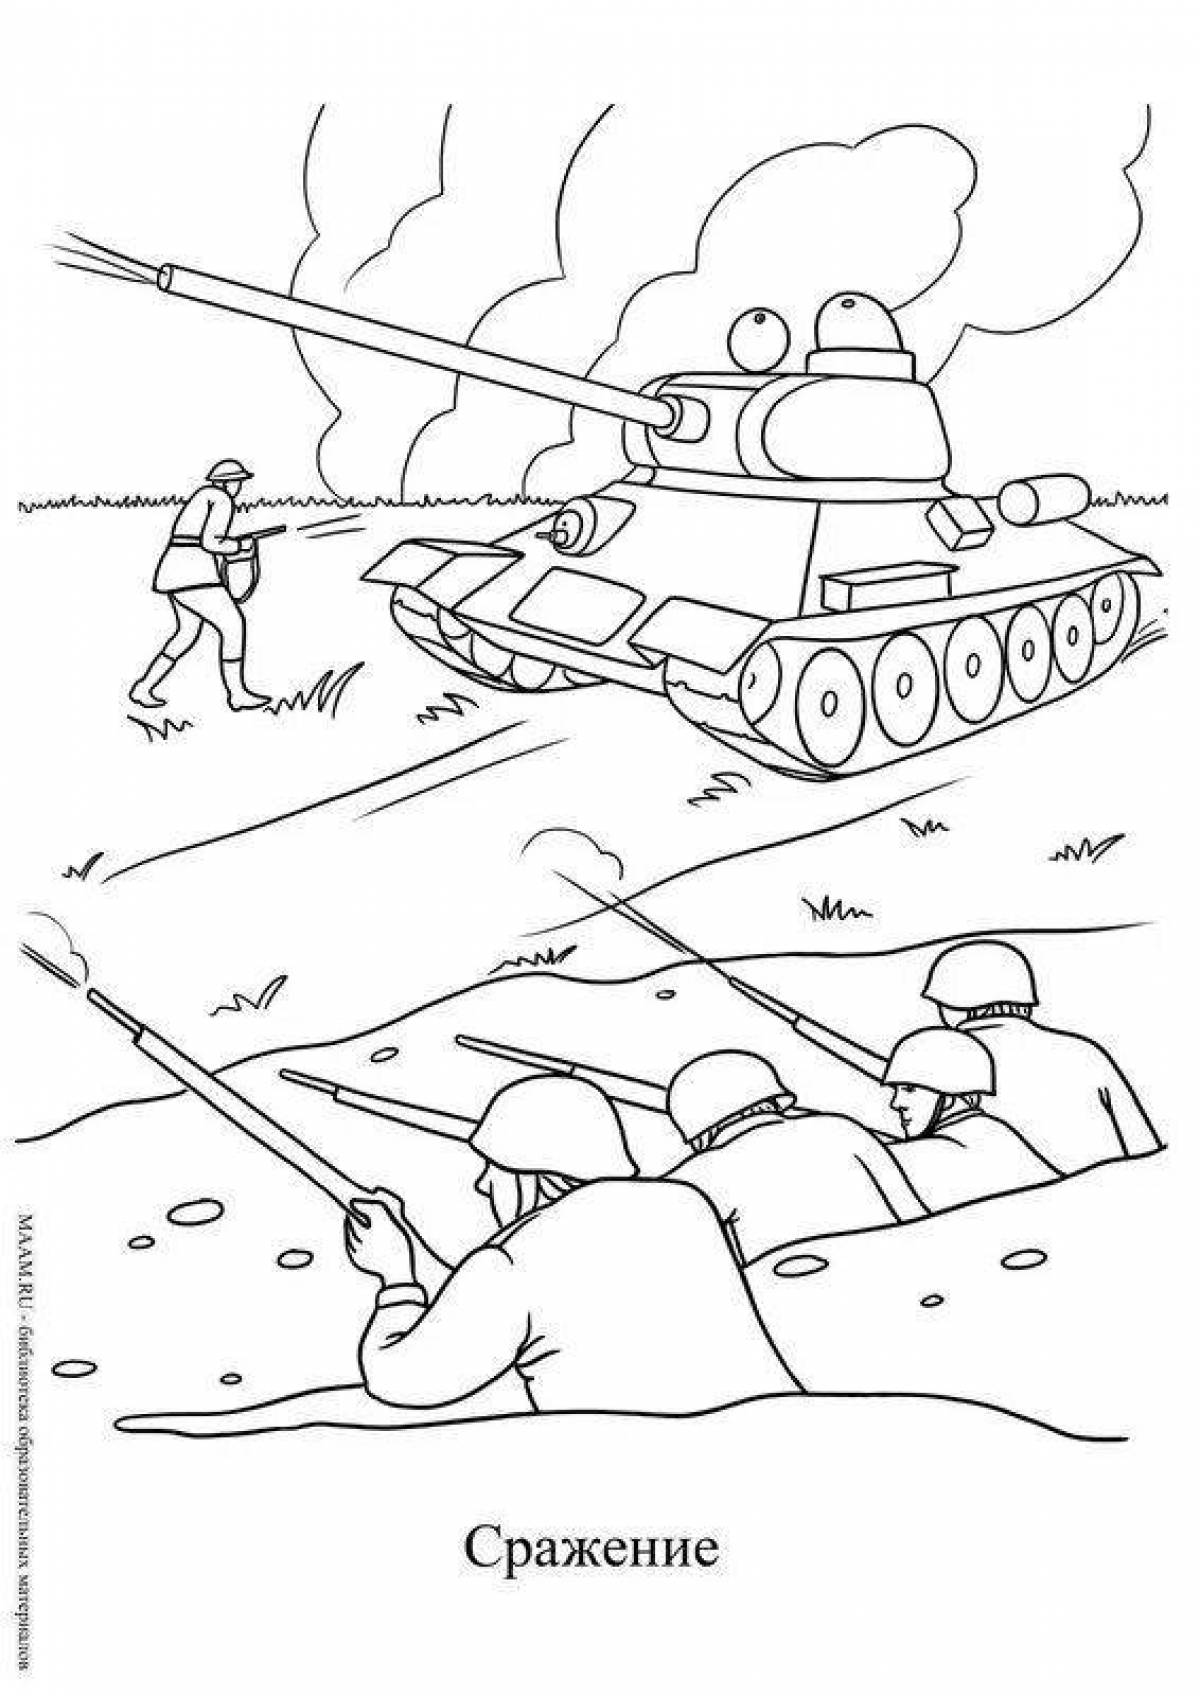 Impressive coloring of the Great Patriotic War